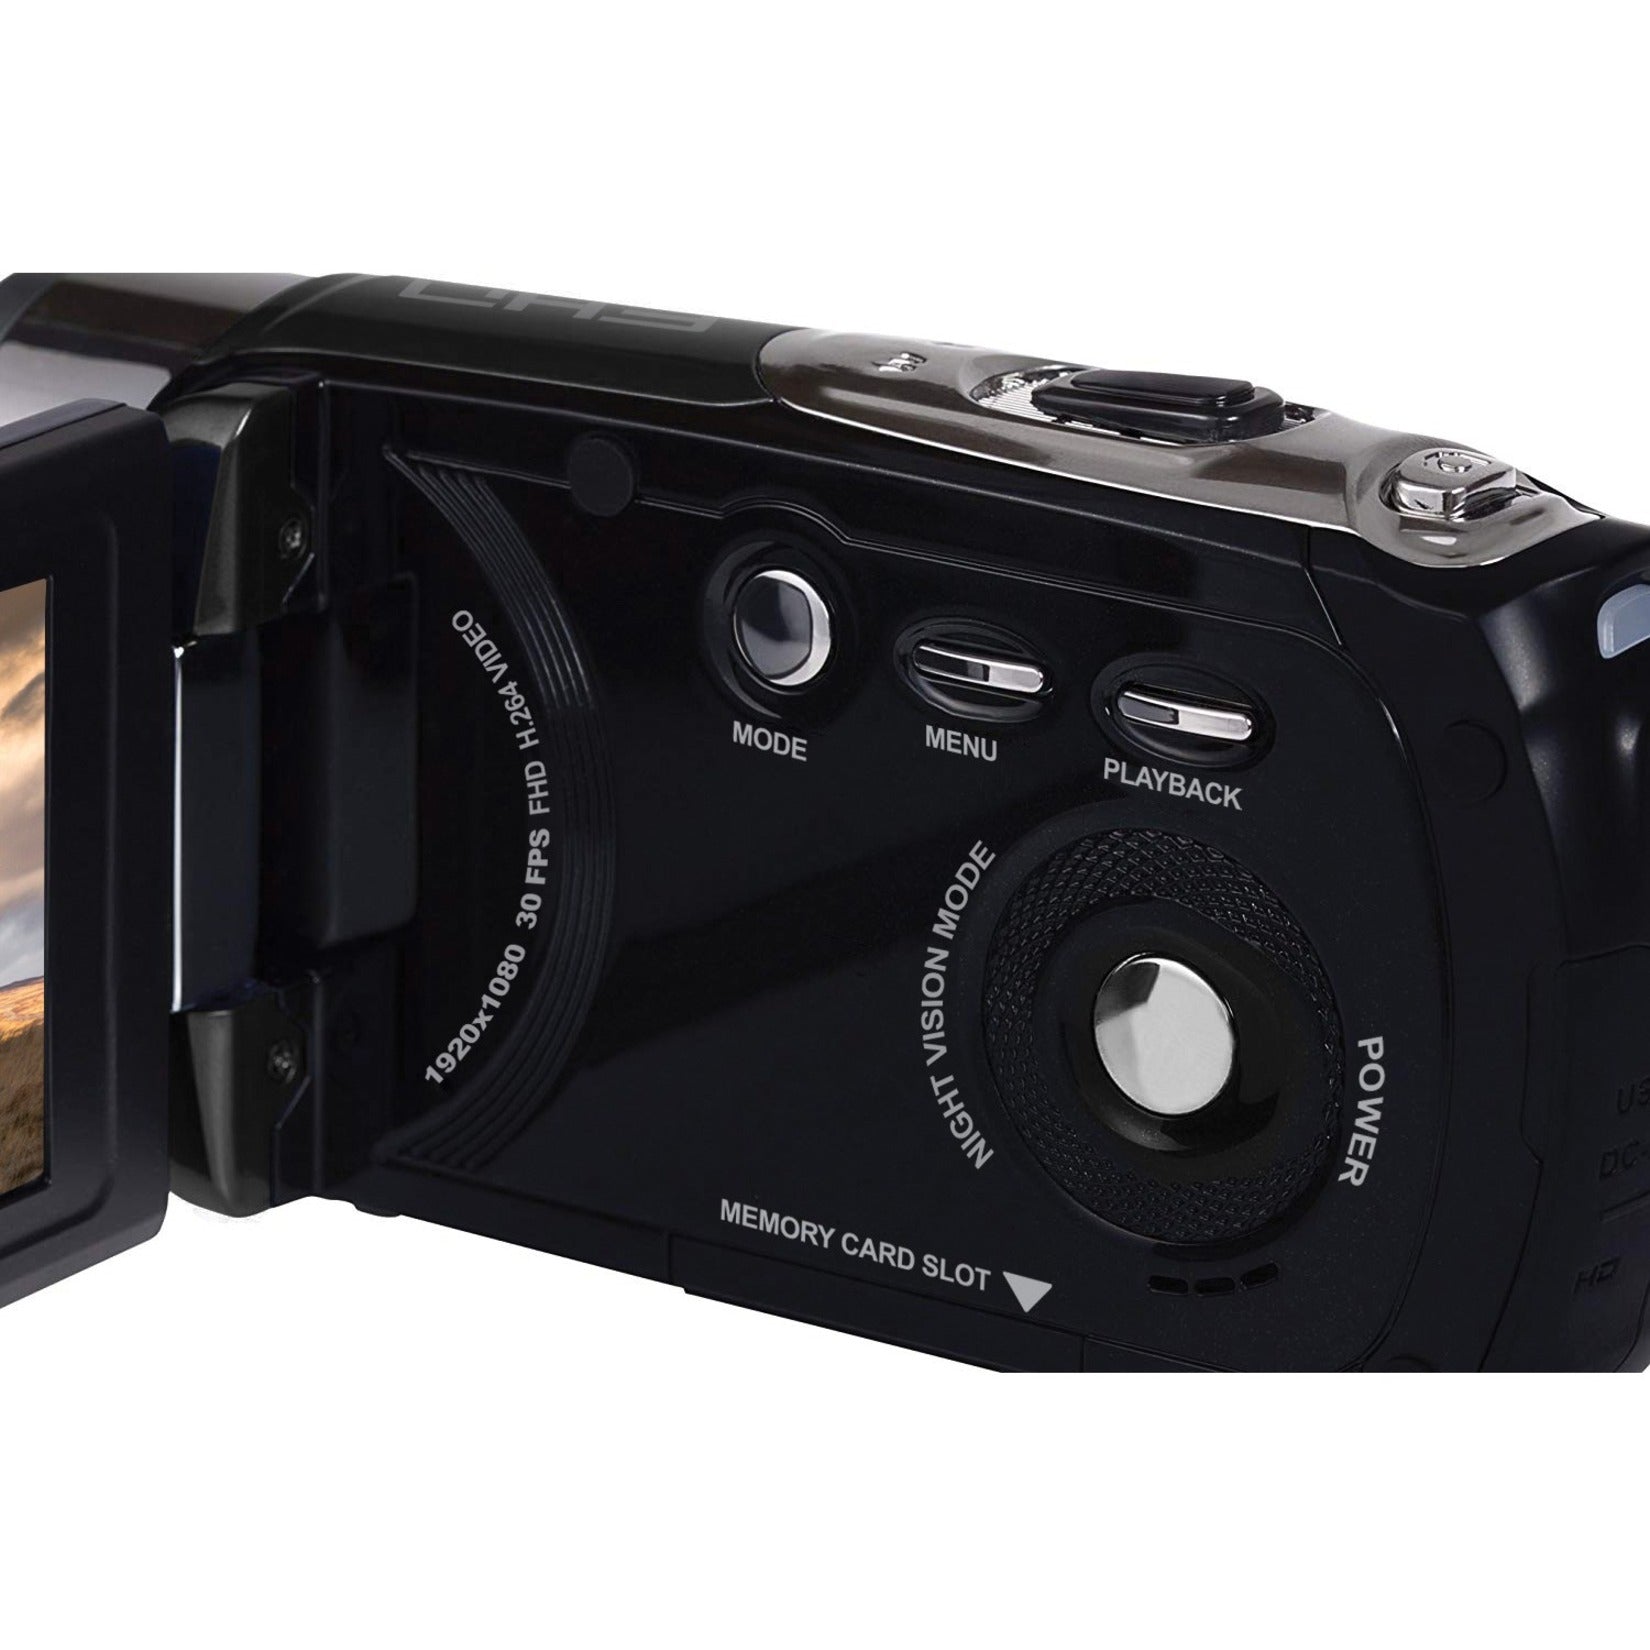 Konica Minolta MN80NV-BK MN80NV Digital Camcorder, Full HD 1080p IR Night Vision, 18x Digital Zoom, Optical Image Stabilization